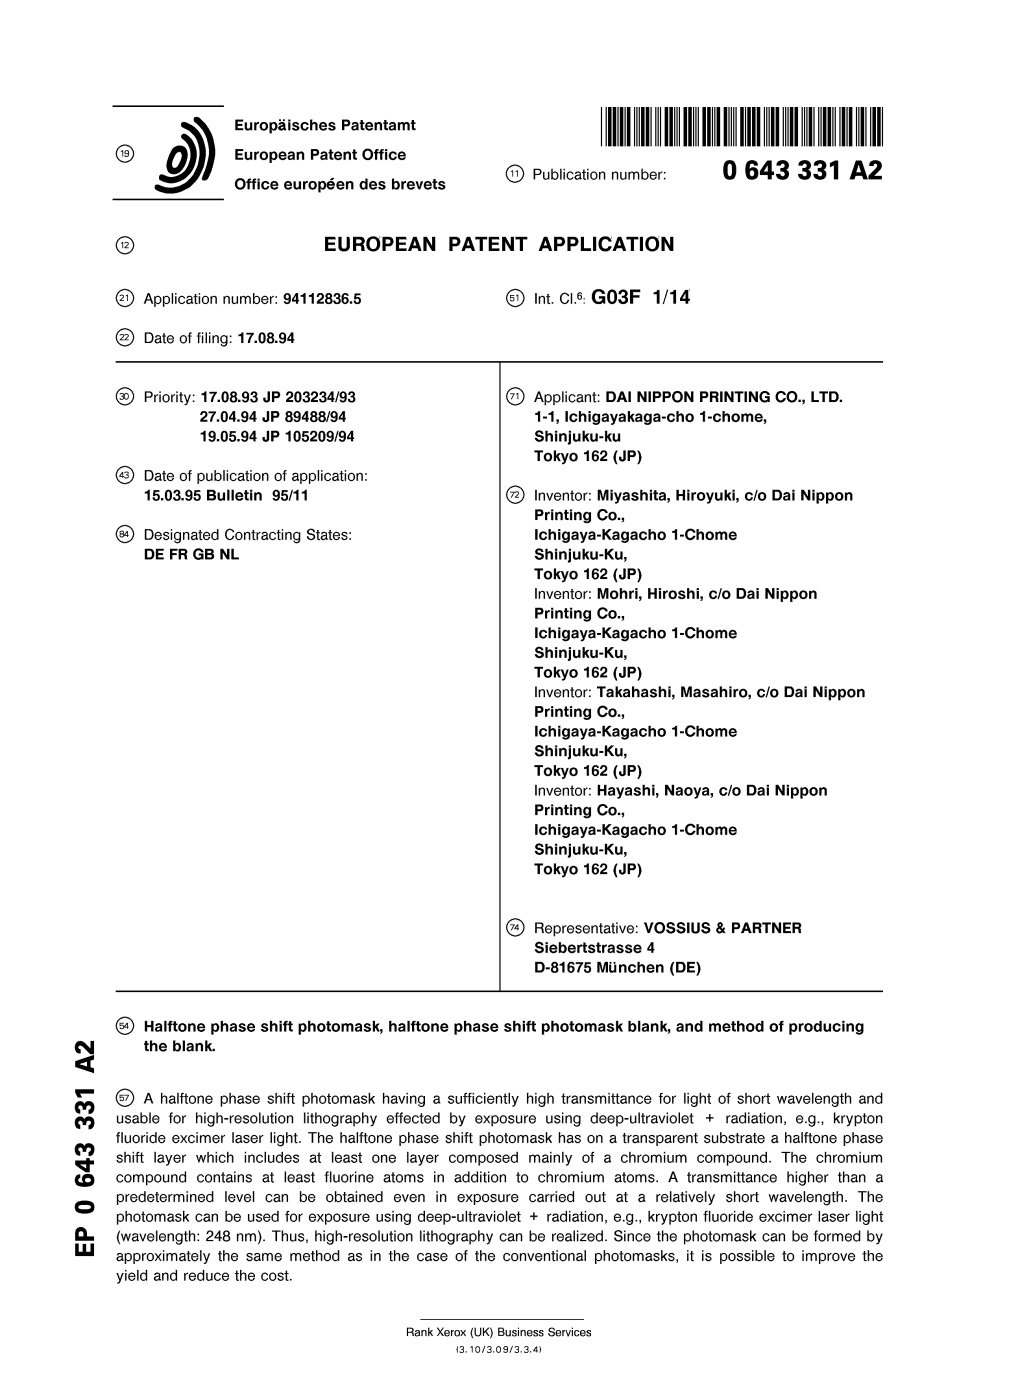 European Patent Office © Publication Number: 0 643 331 A2 Office Europeen Des Brevets